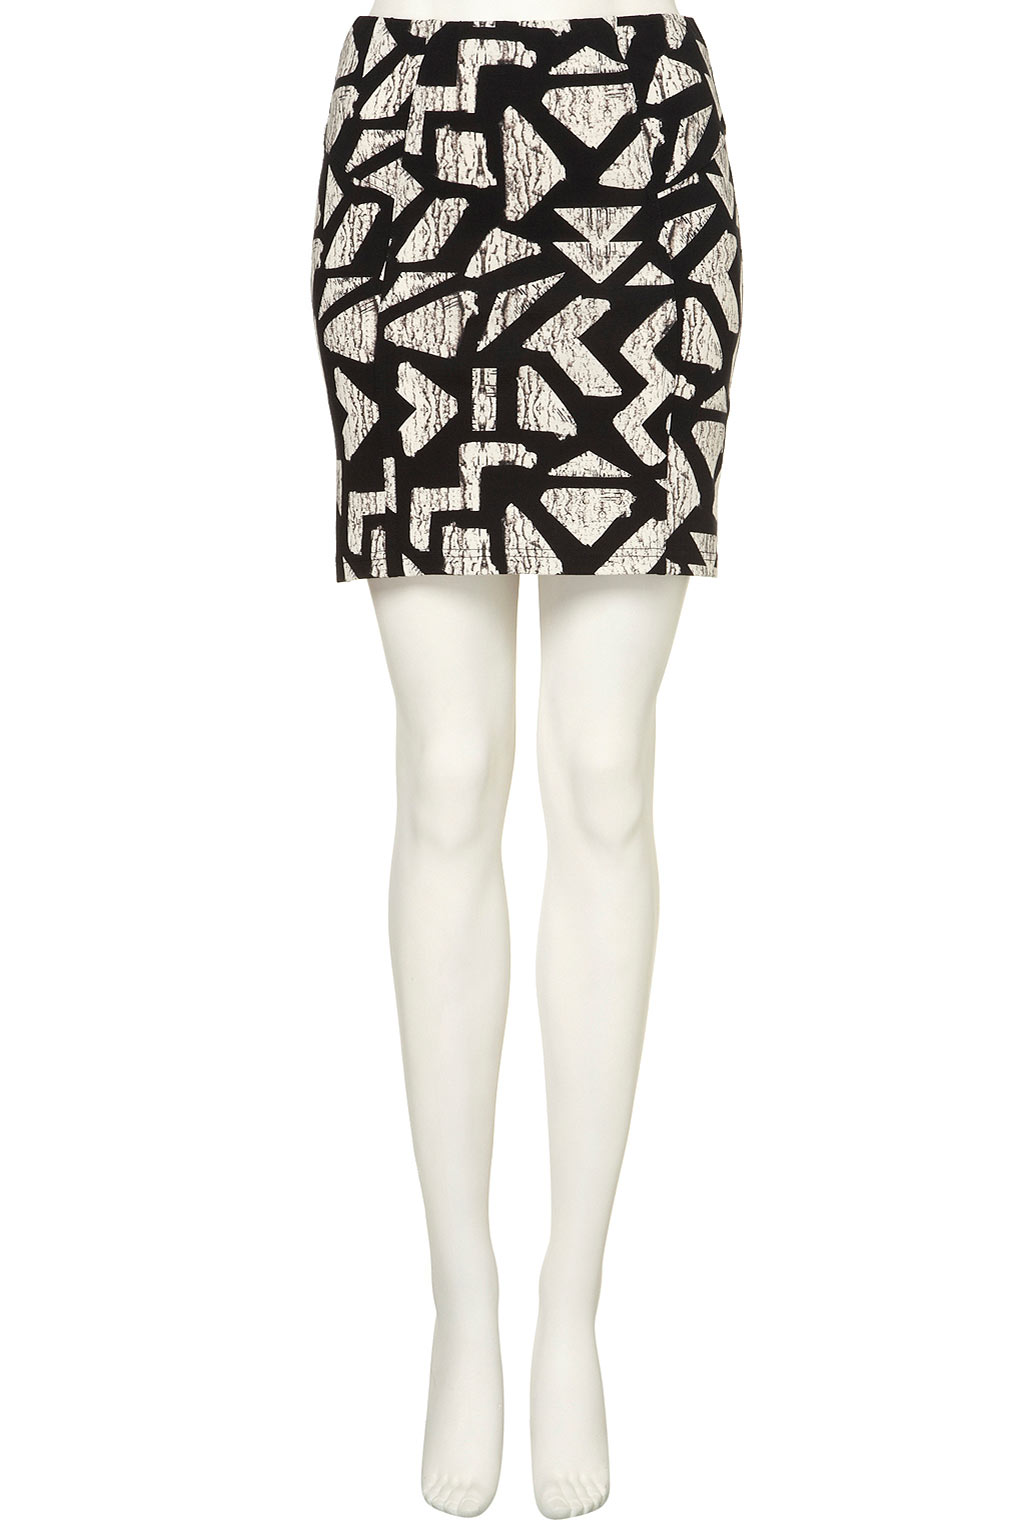 Lovemystyle Bodycon Midi Skirt With Aztec Style Print